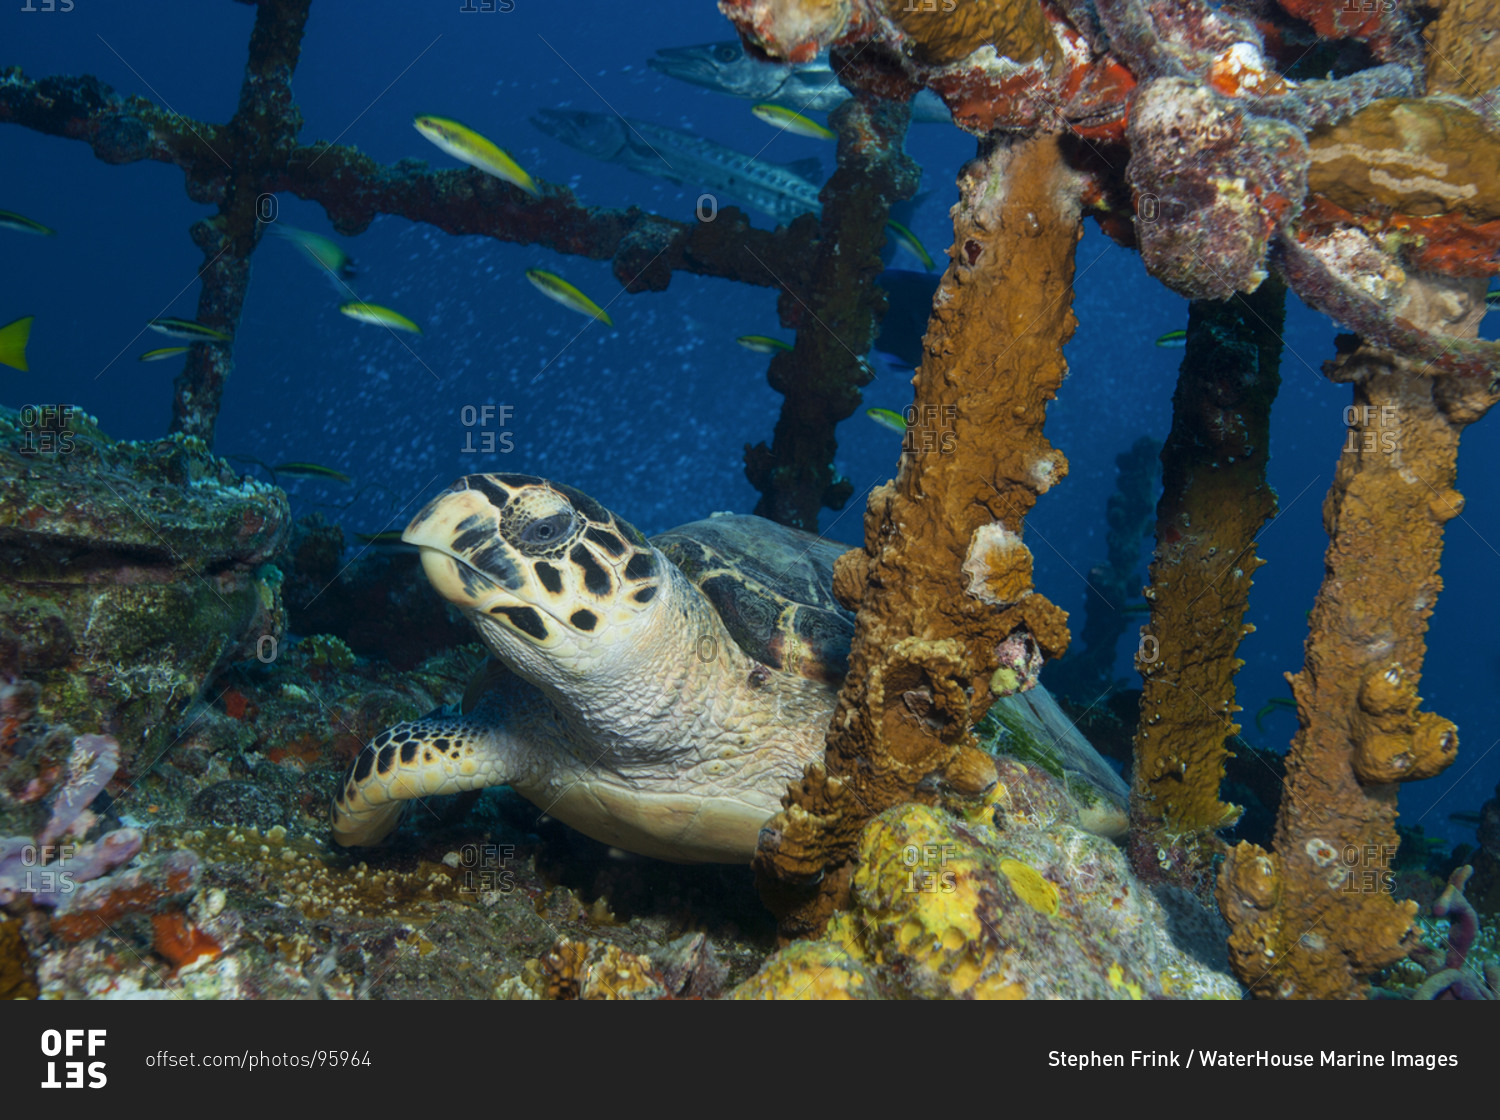 A Hawksbill turtle (Eretmochelys imbricata) on the deck of the Duane shipwreck, Key Largo, Florida